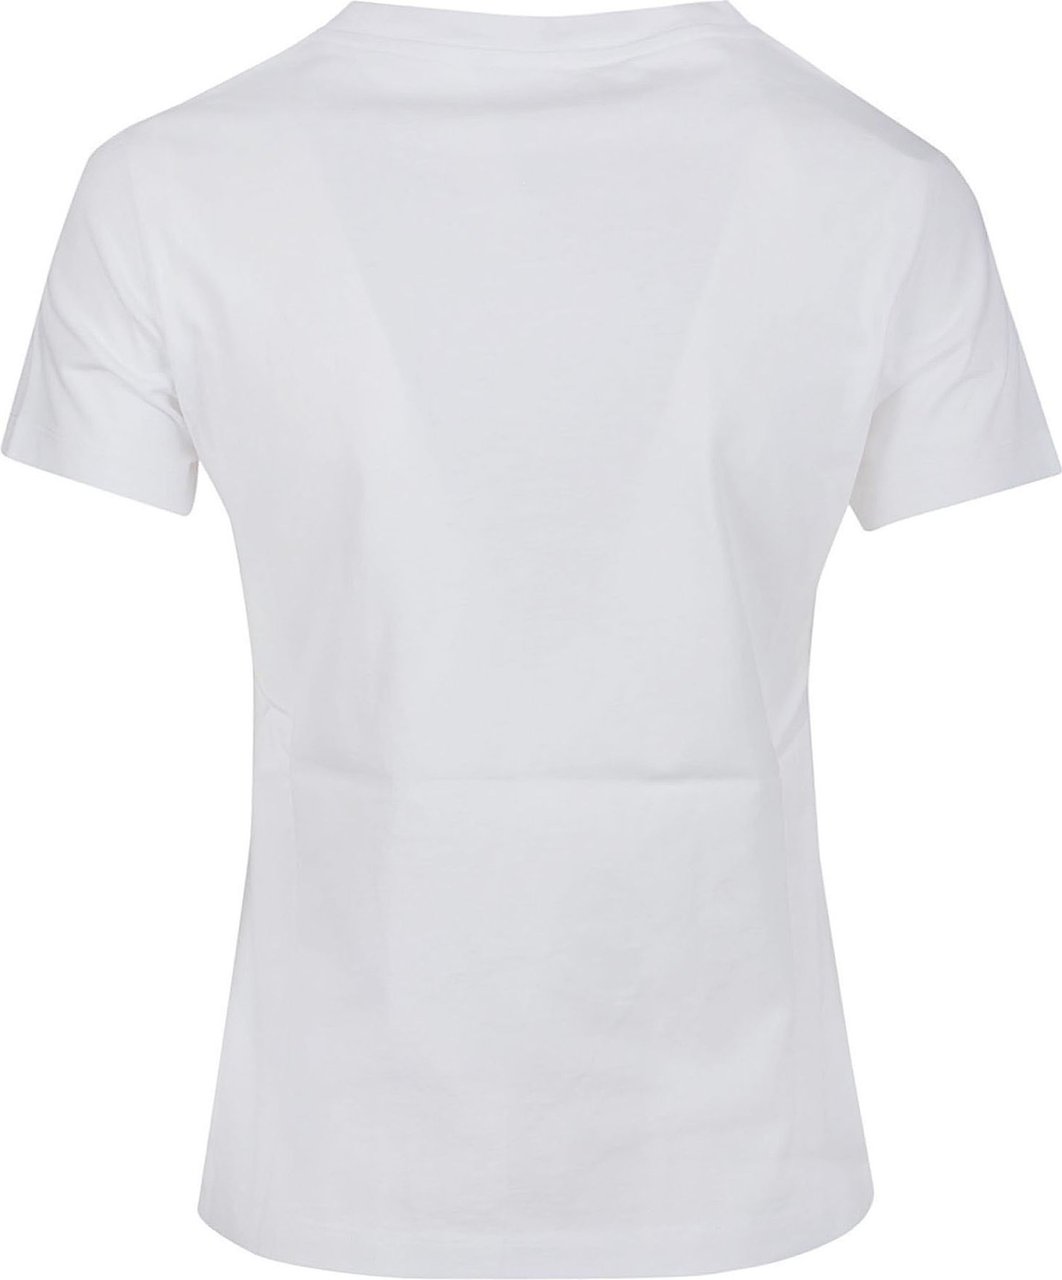 Kenzo Boke Crest Classic T-shirt White Wit